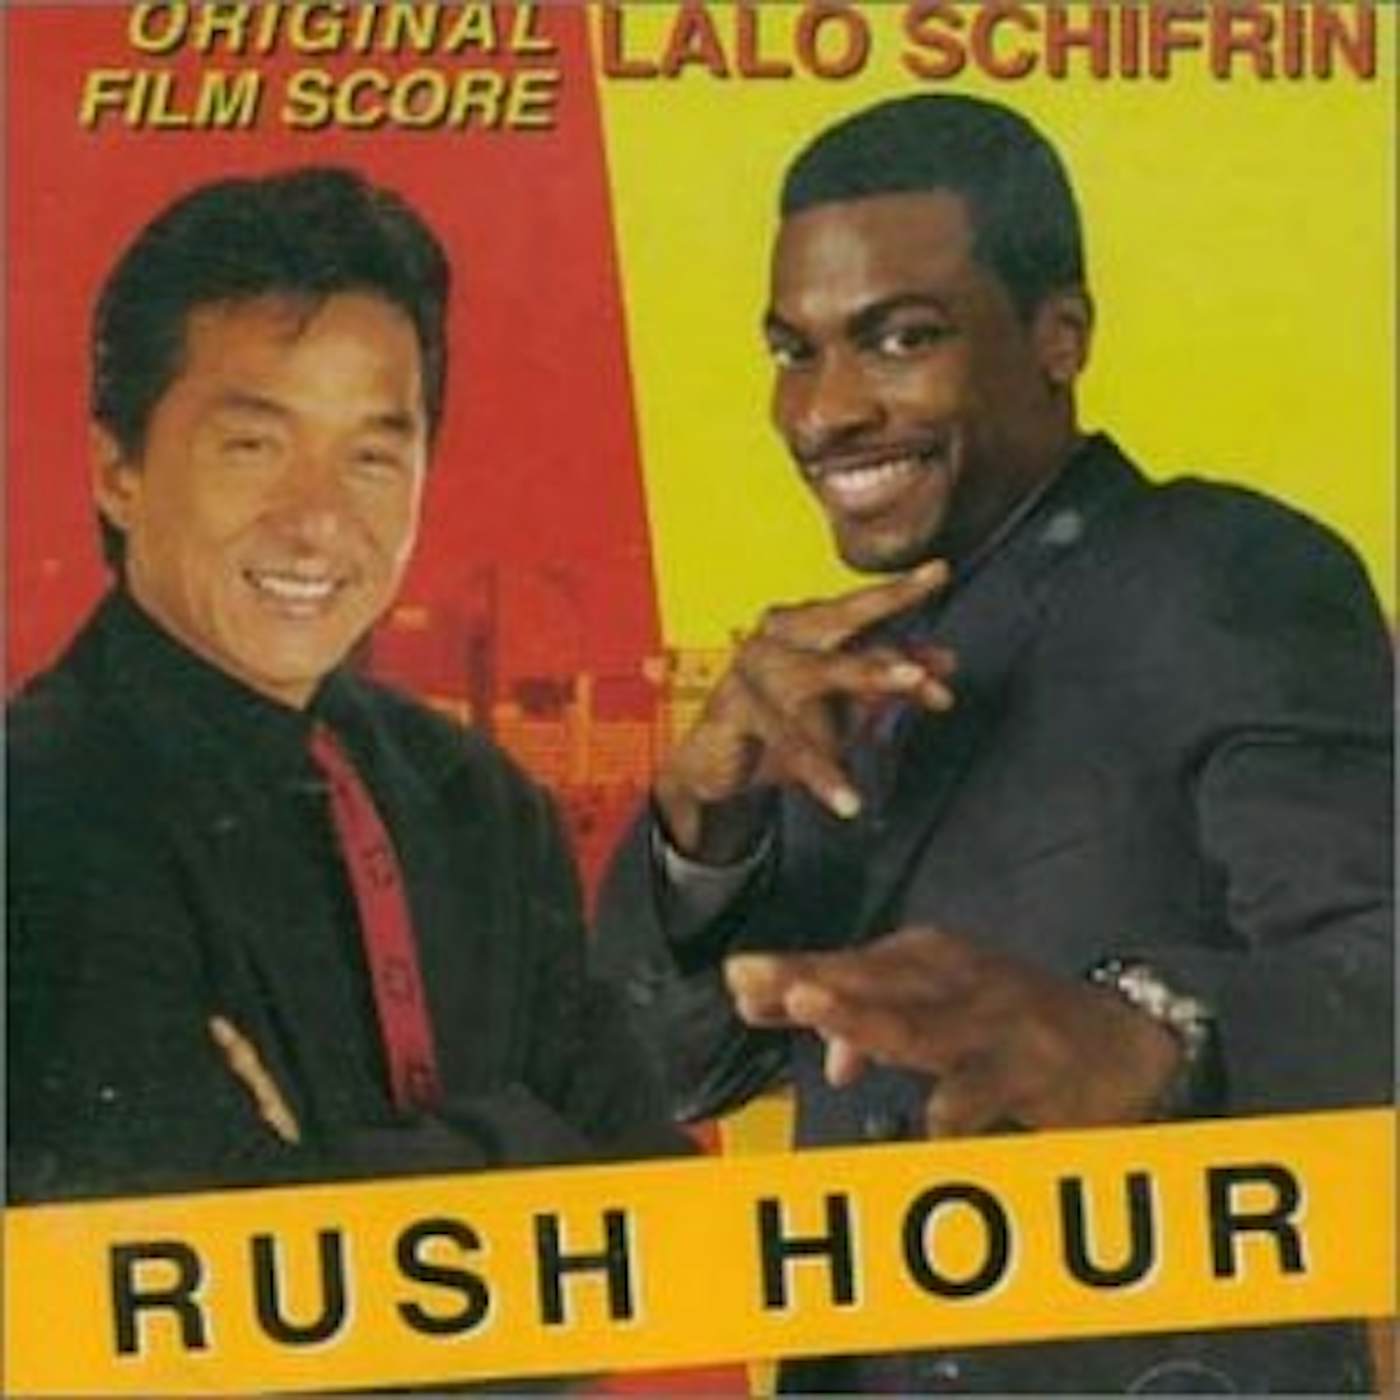 Lalo Schifrin RUSH HOUR: Original Soundtrack CD